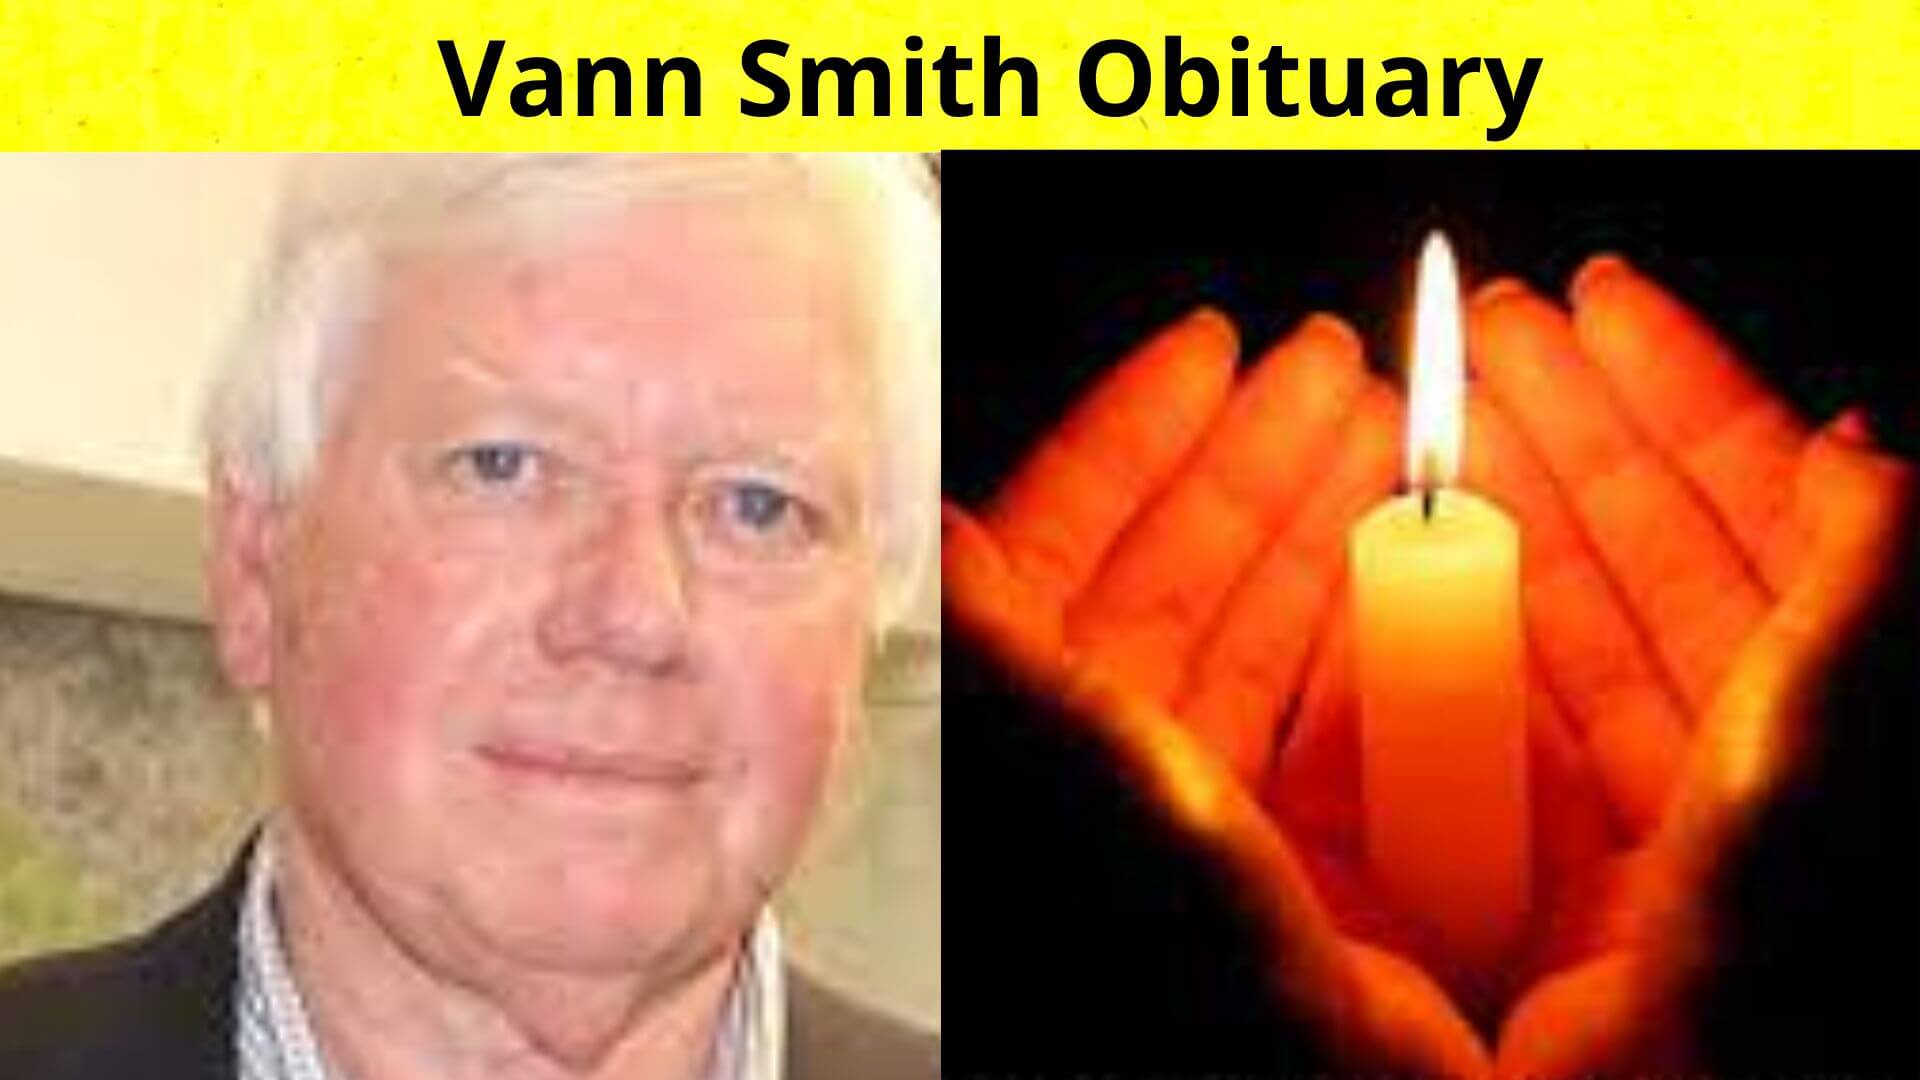 Vann Smith Obituary (August 2022) Shocking Details!